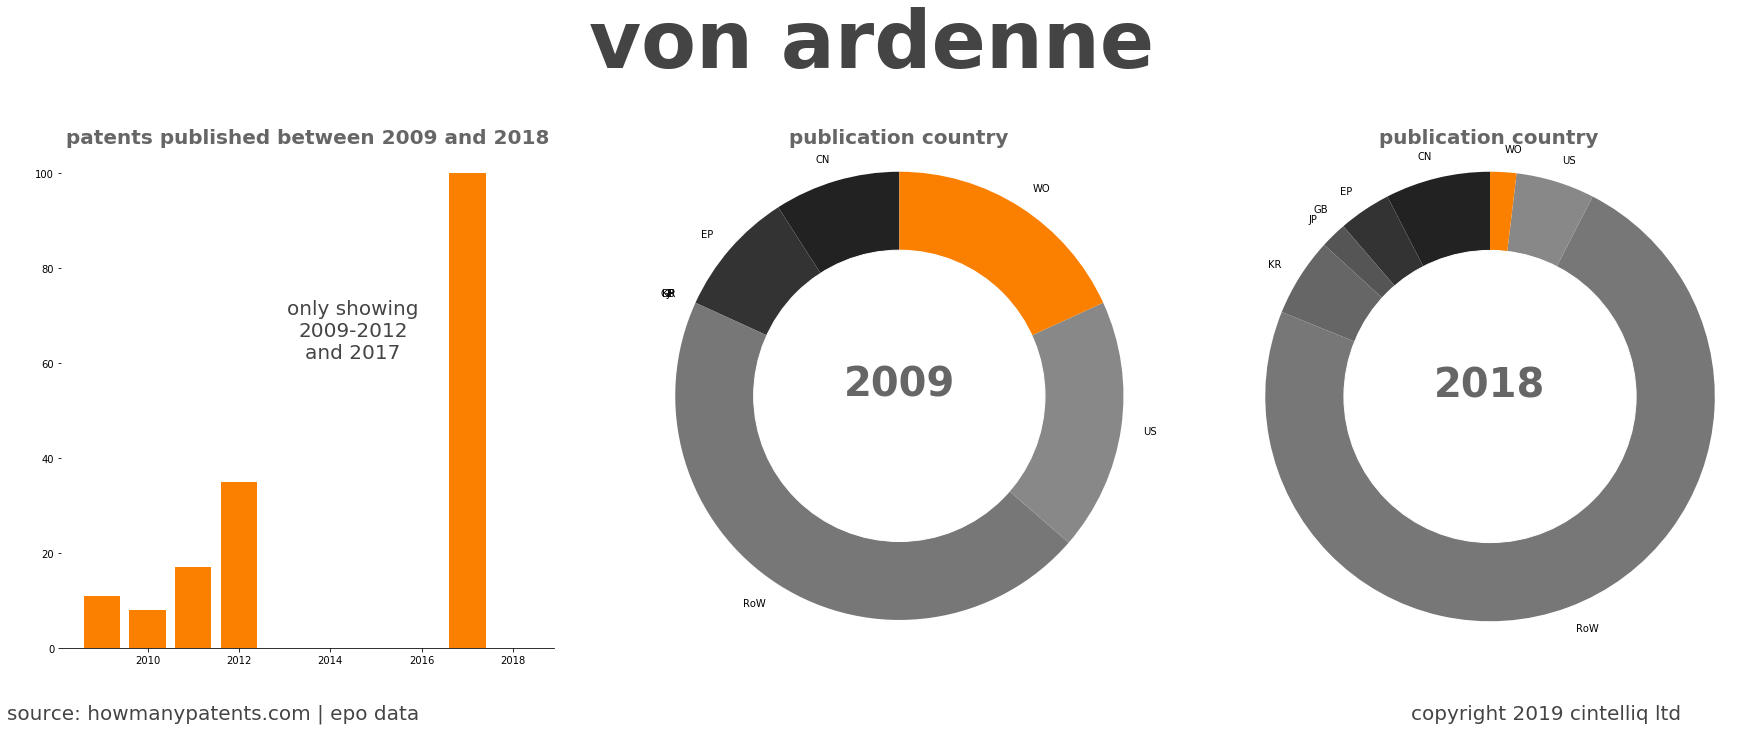 summary of patents for Von Ardenne